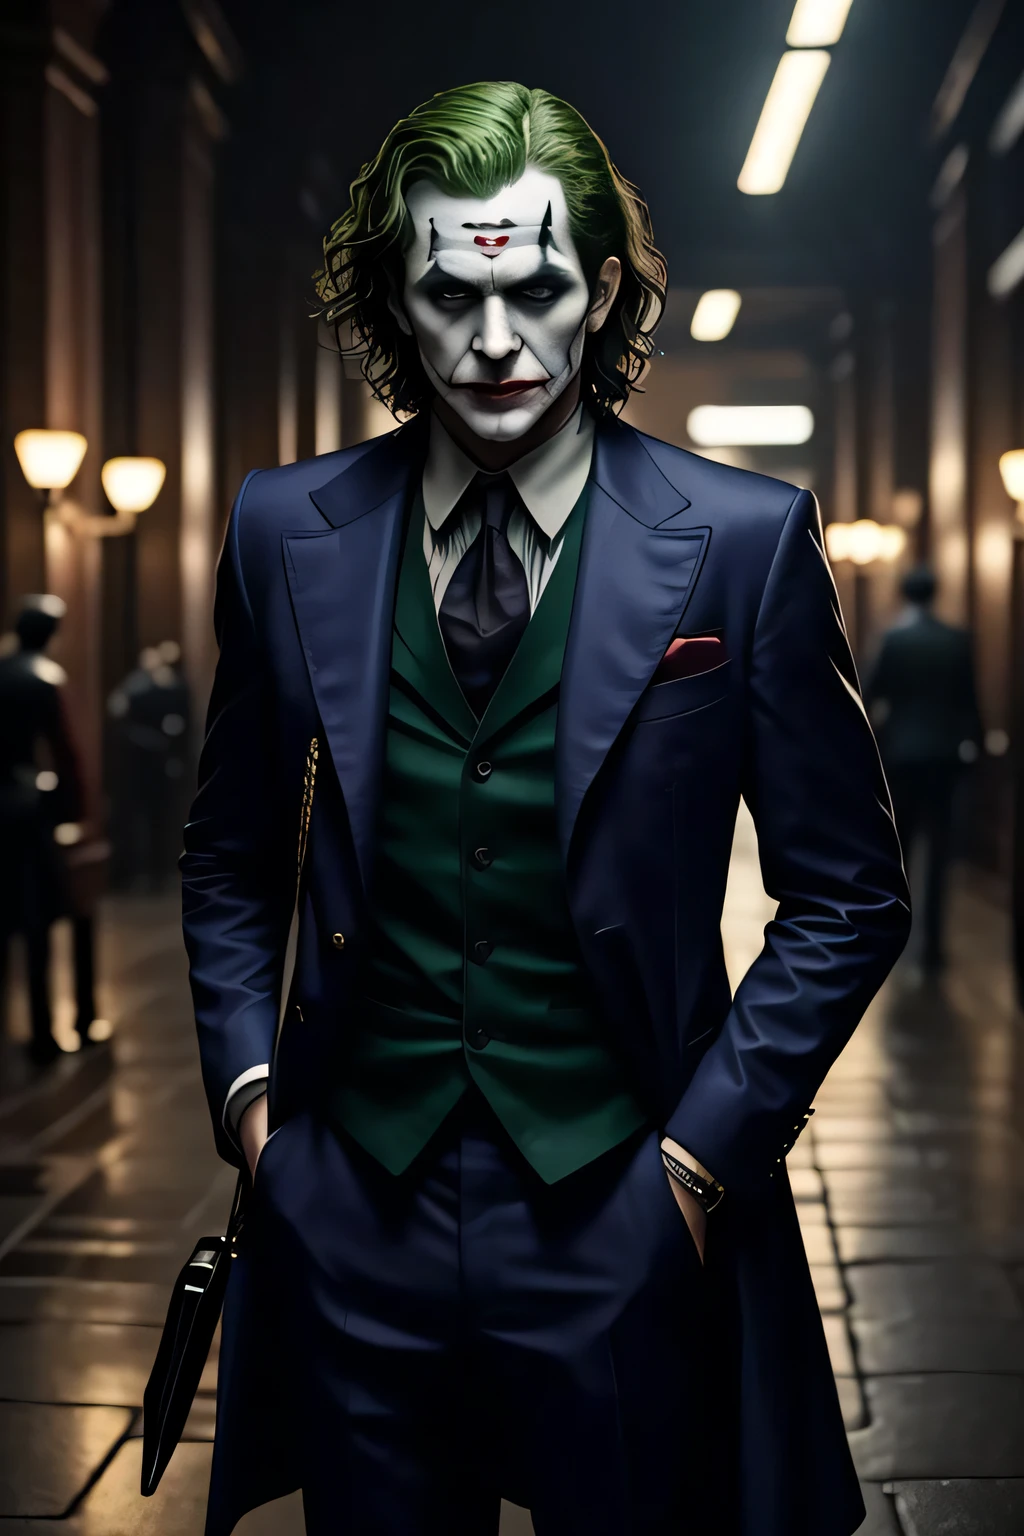 masterpiece, best quality, realistic, half body shot of Joker, DC universe cinematic, detailed face, 8k, uhd, sharp focus